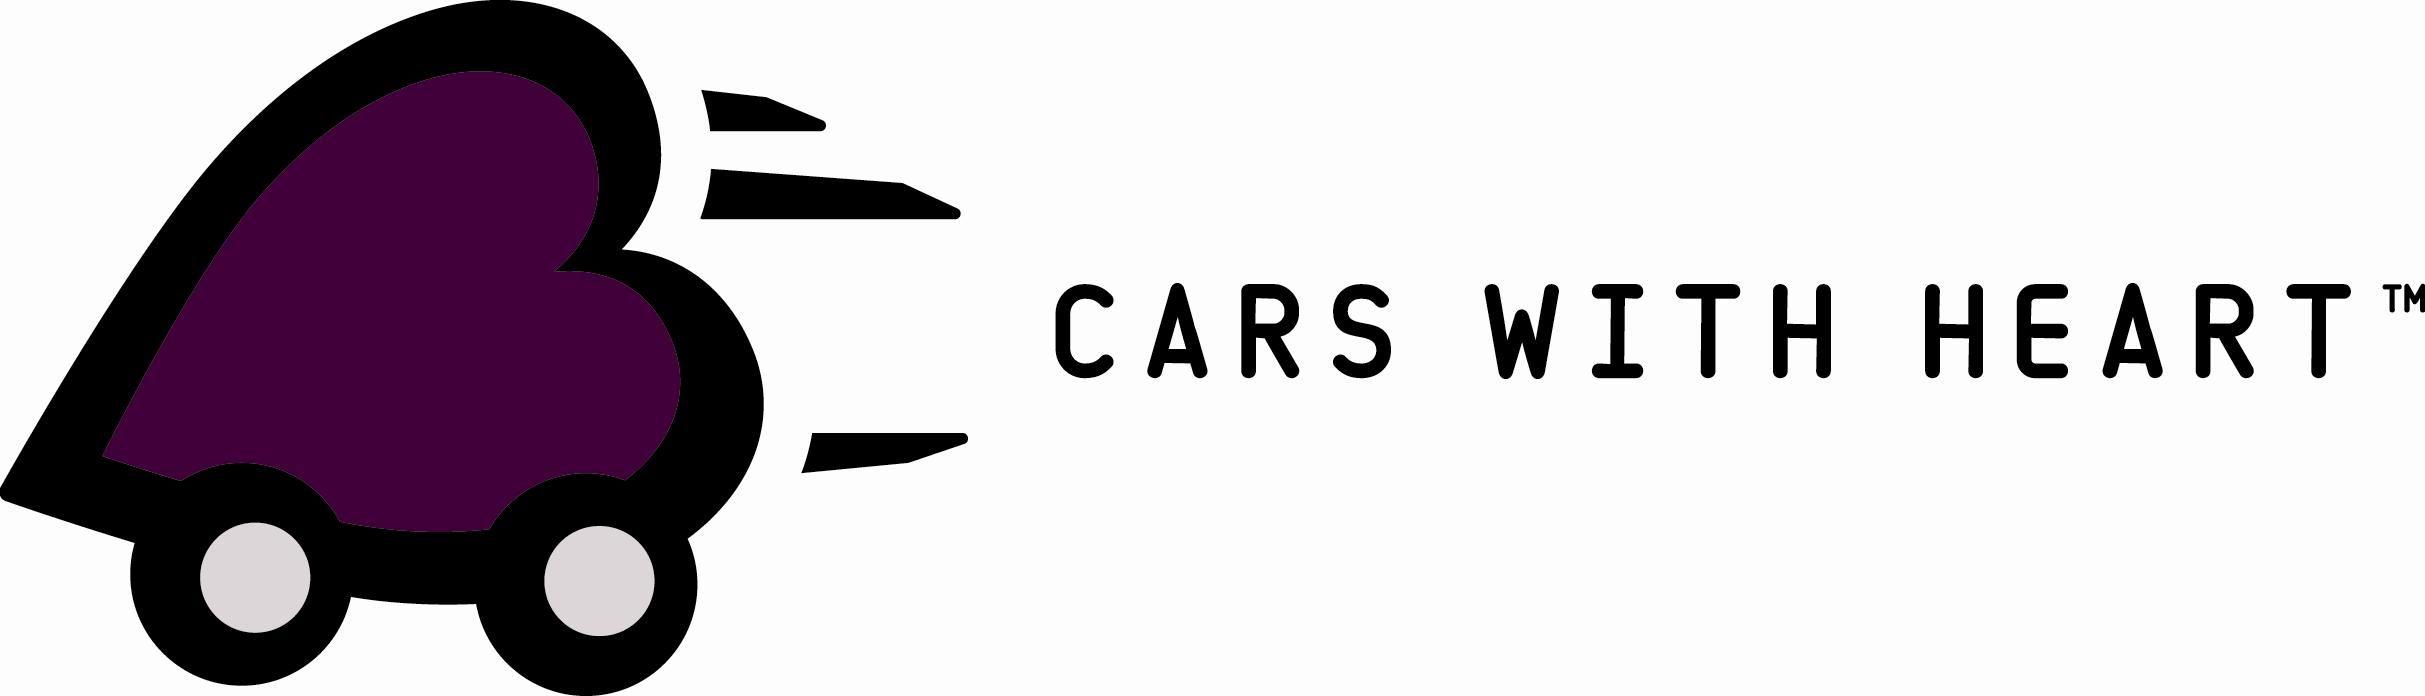 Heart Car Logo - Car Donation network Mika Blog